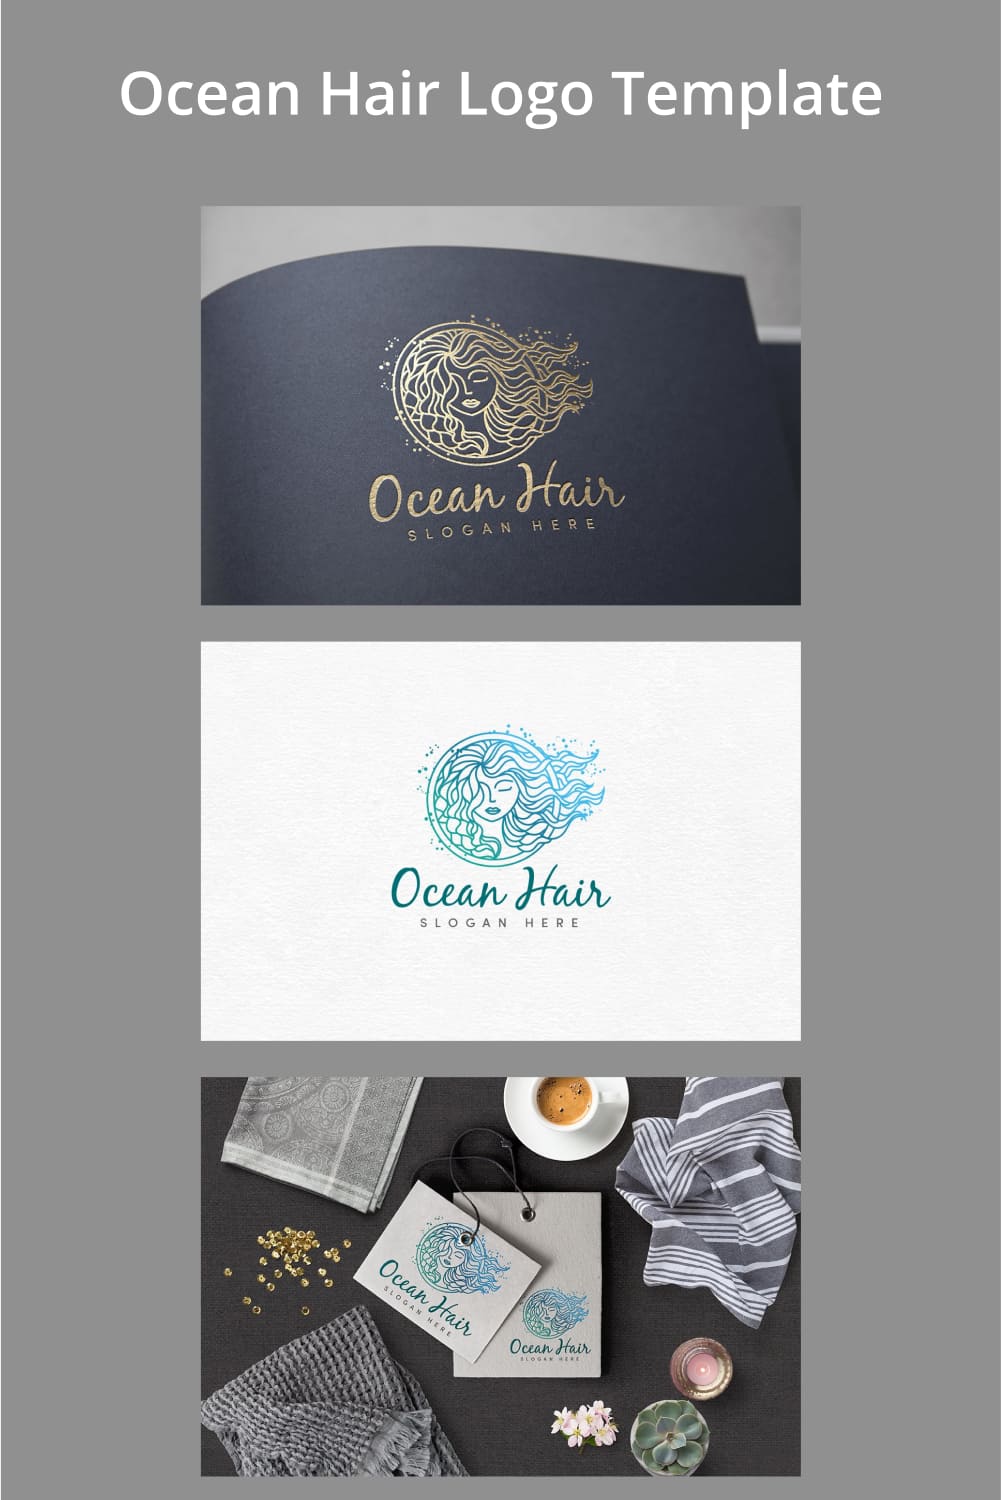 Ocean Hair Logo Template - pinterest image preview.